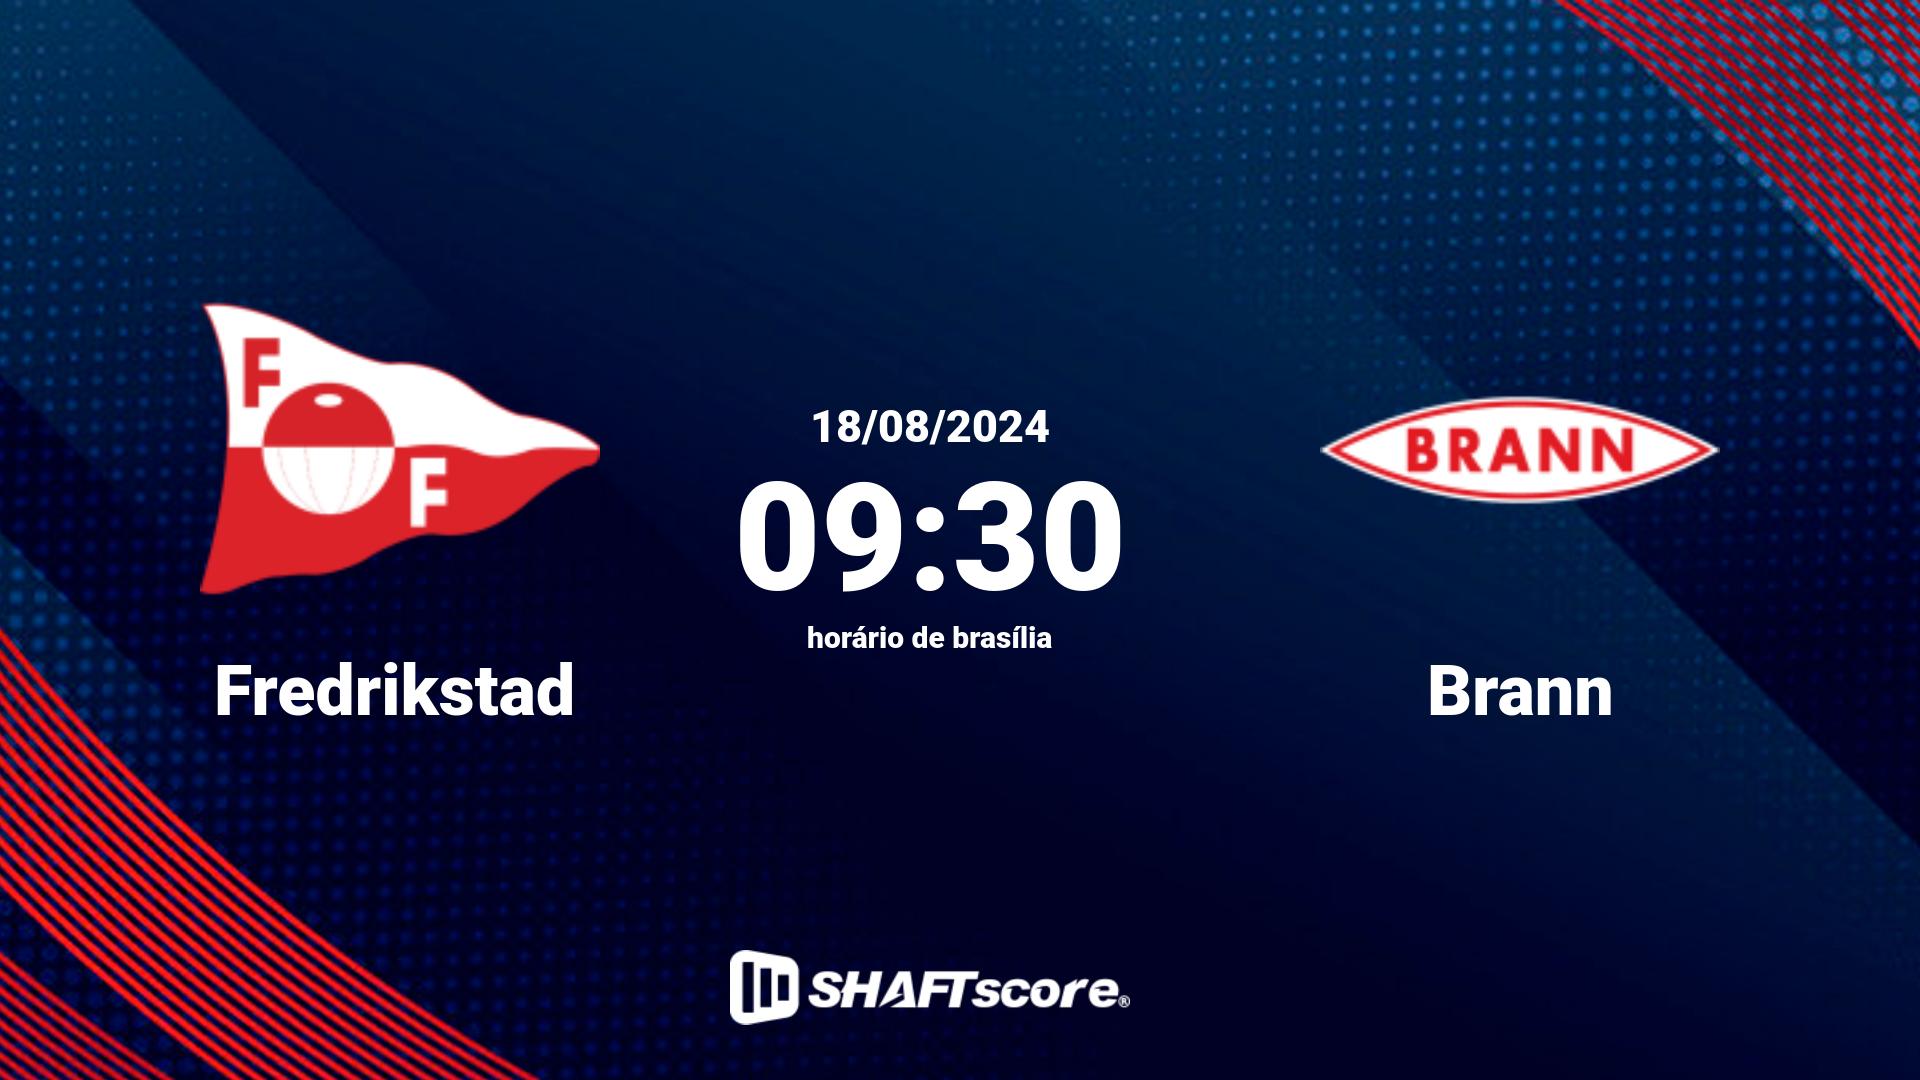 Estatísticas do jogo Fredrikstad vs Brann 18.08 09:30